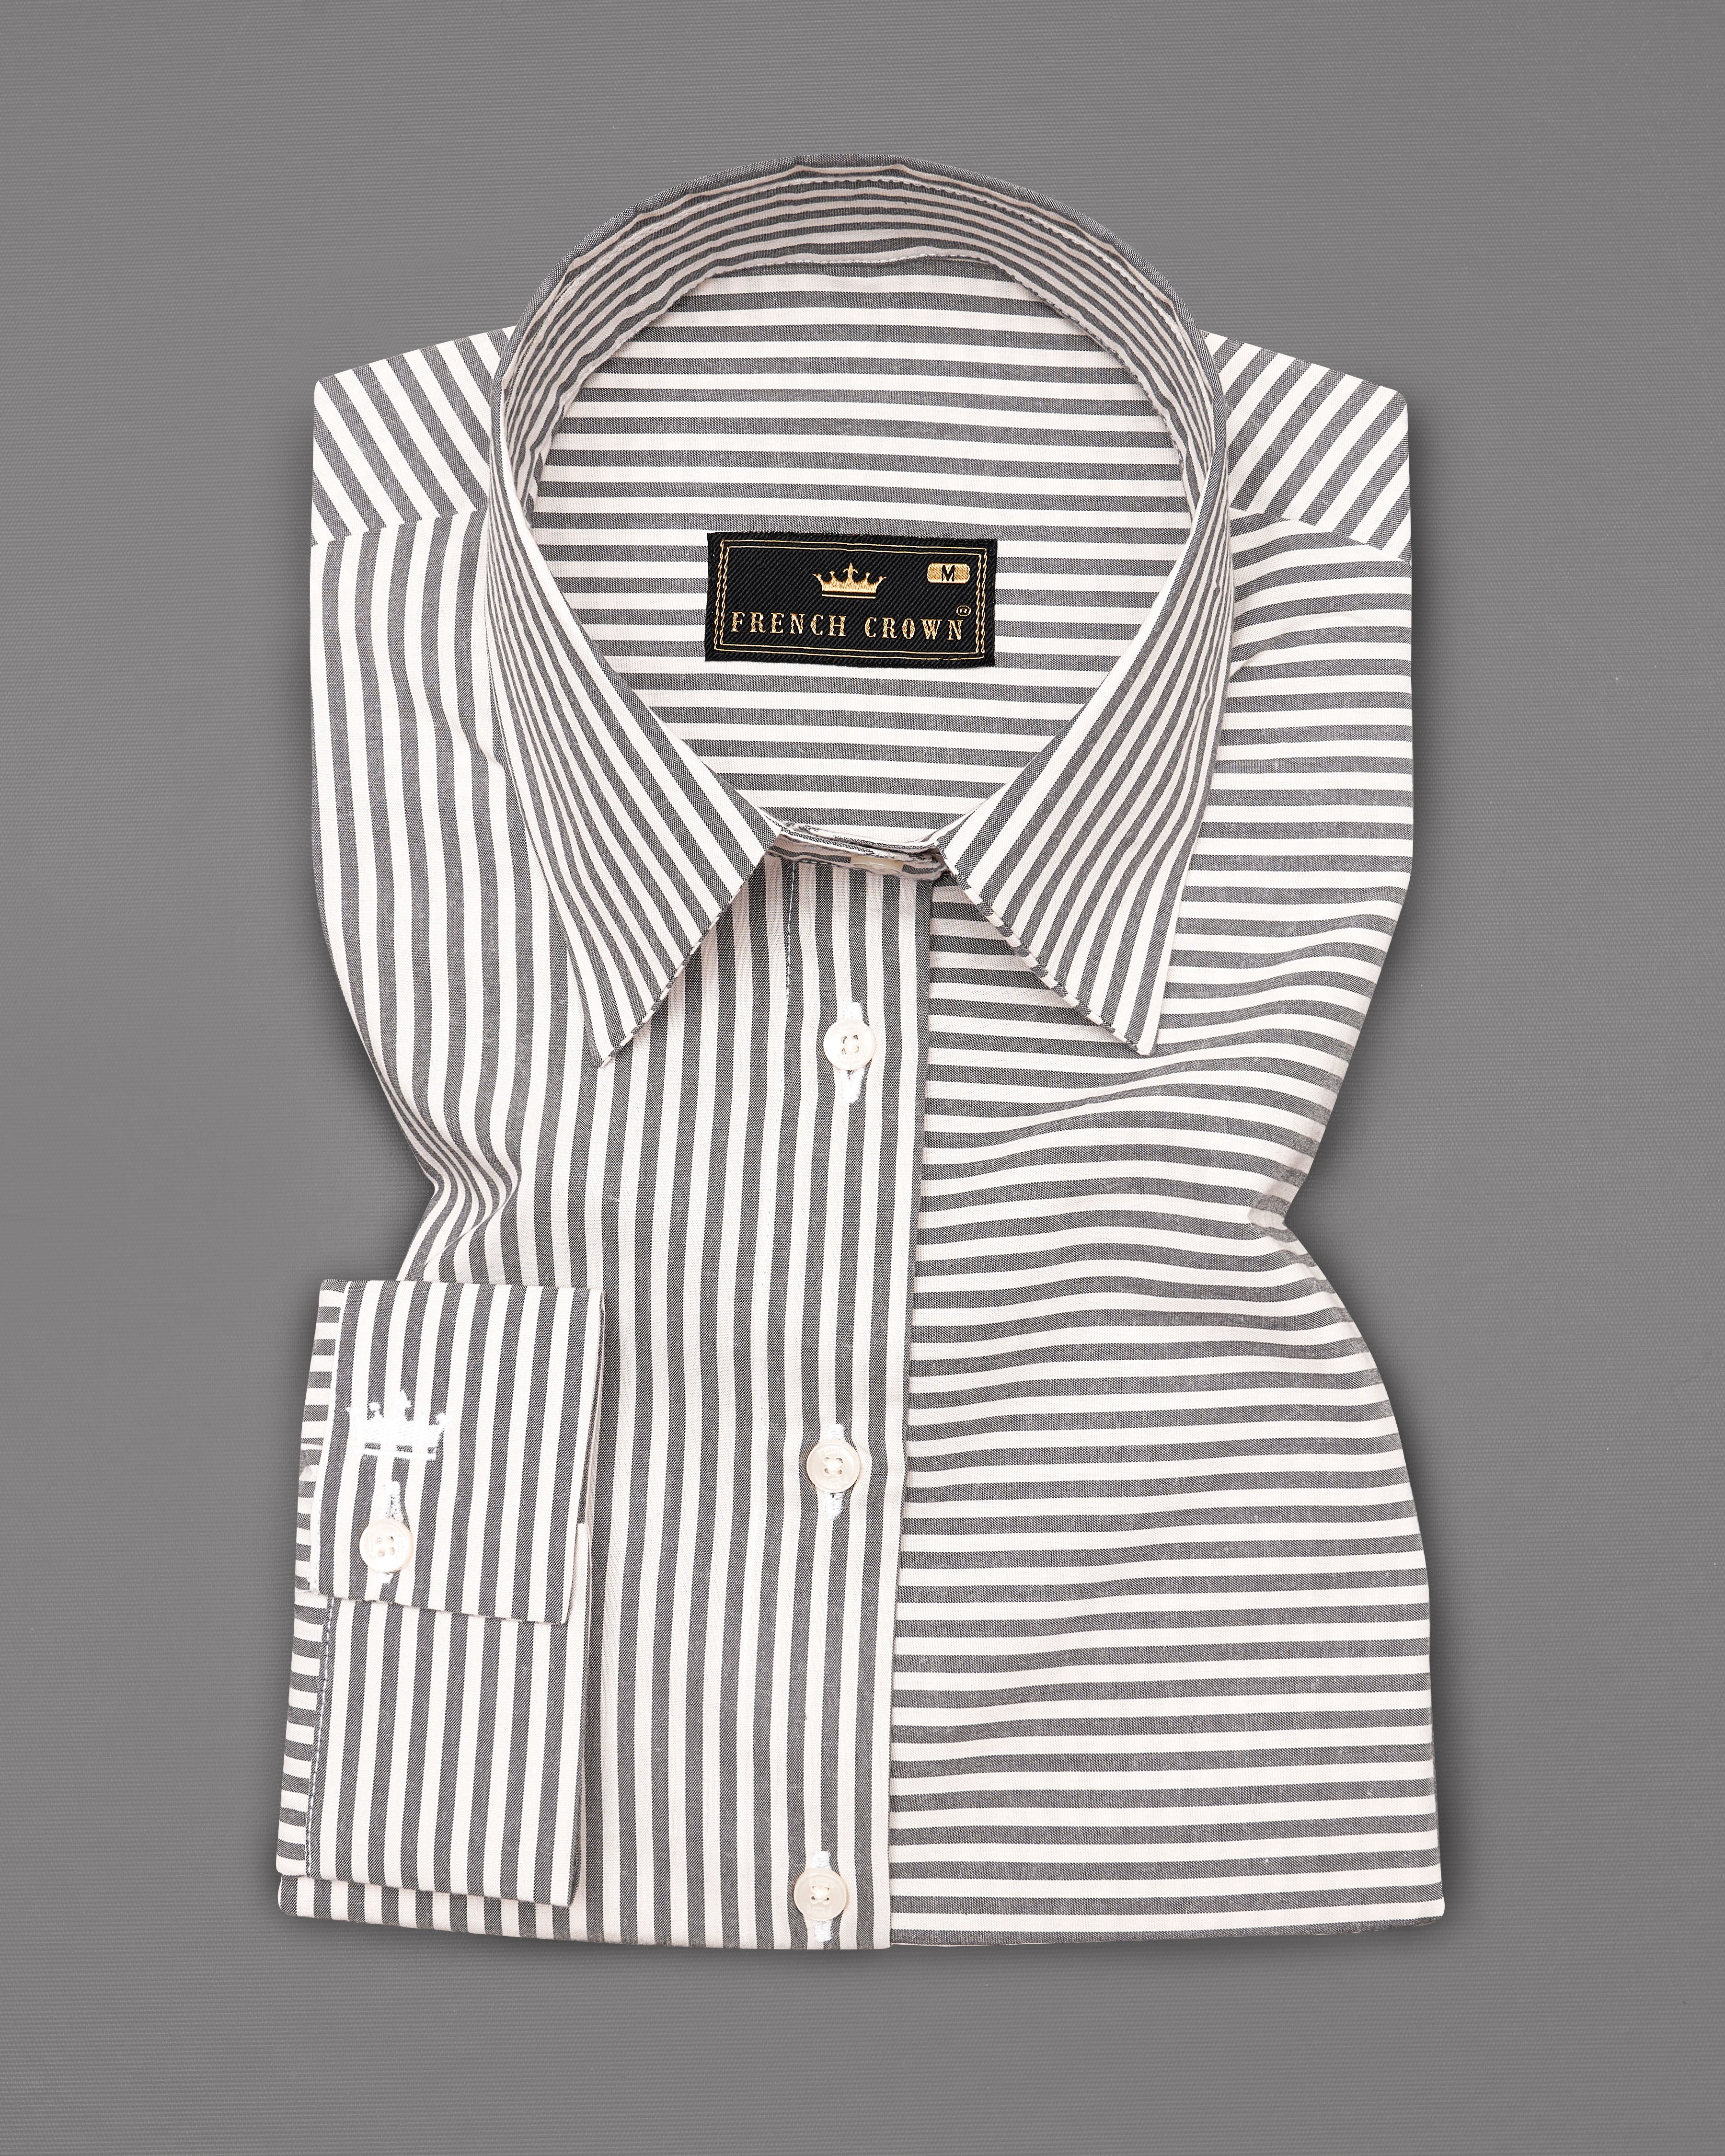 Bright White with Regent Gray Striped Premium Cotton Shirt WS032-32, WS032-34, WS032-36, WS032-38, WS032-40, WS032-42